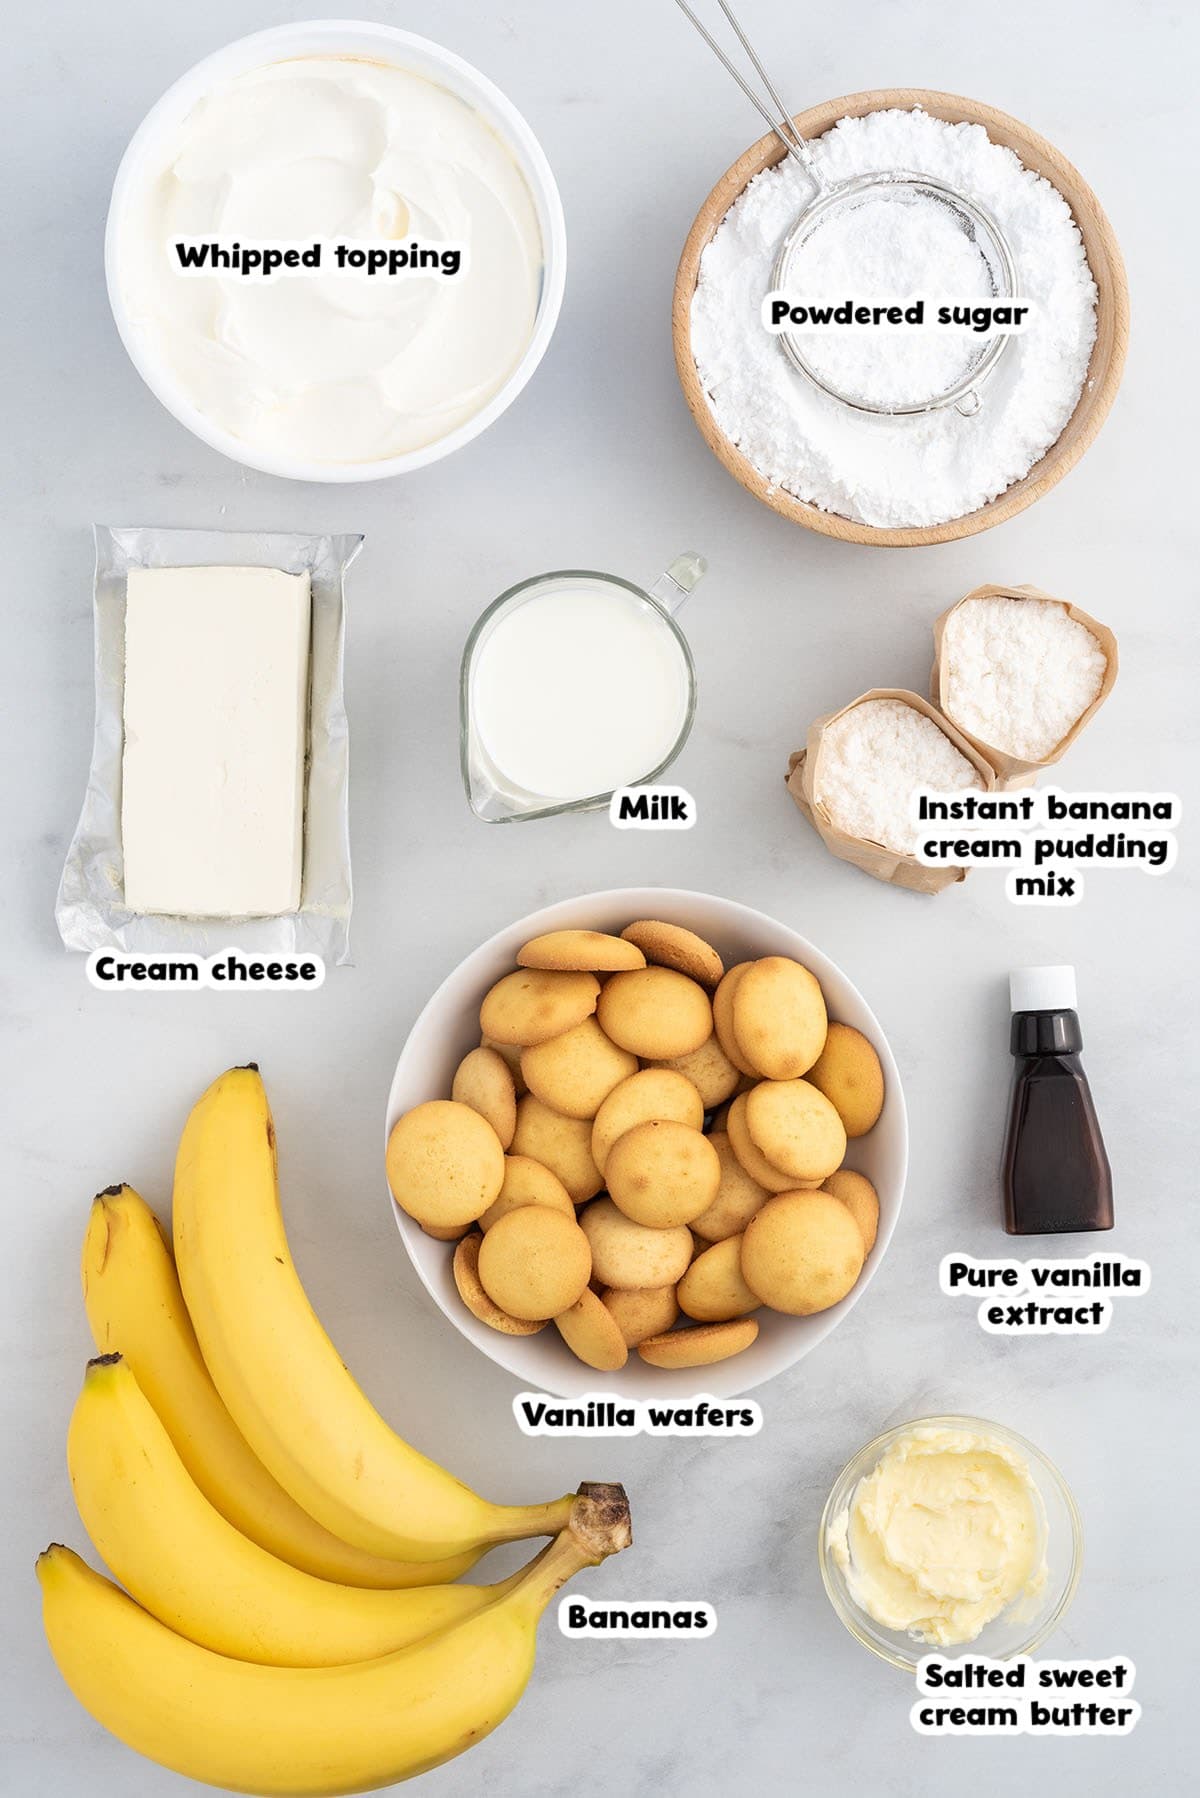 Banana Delight ingredients image